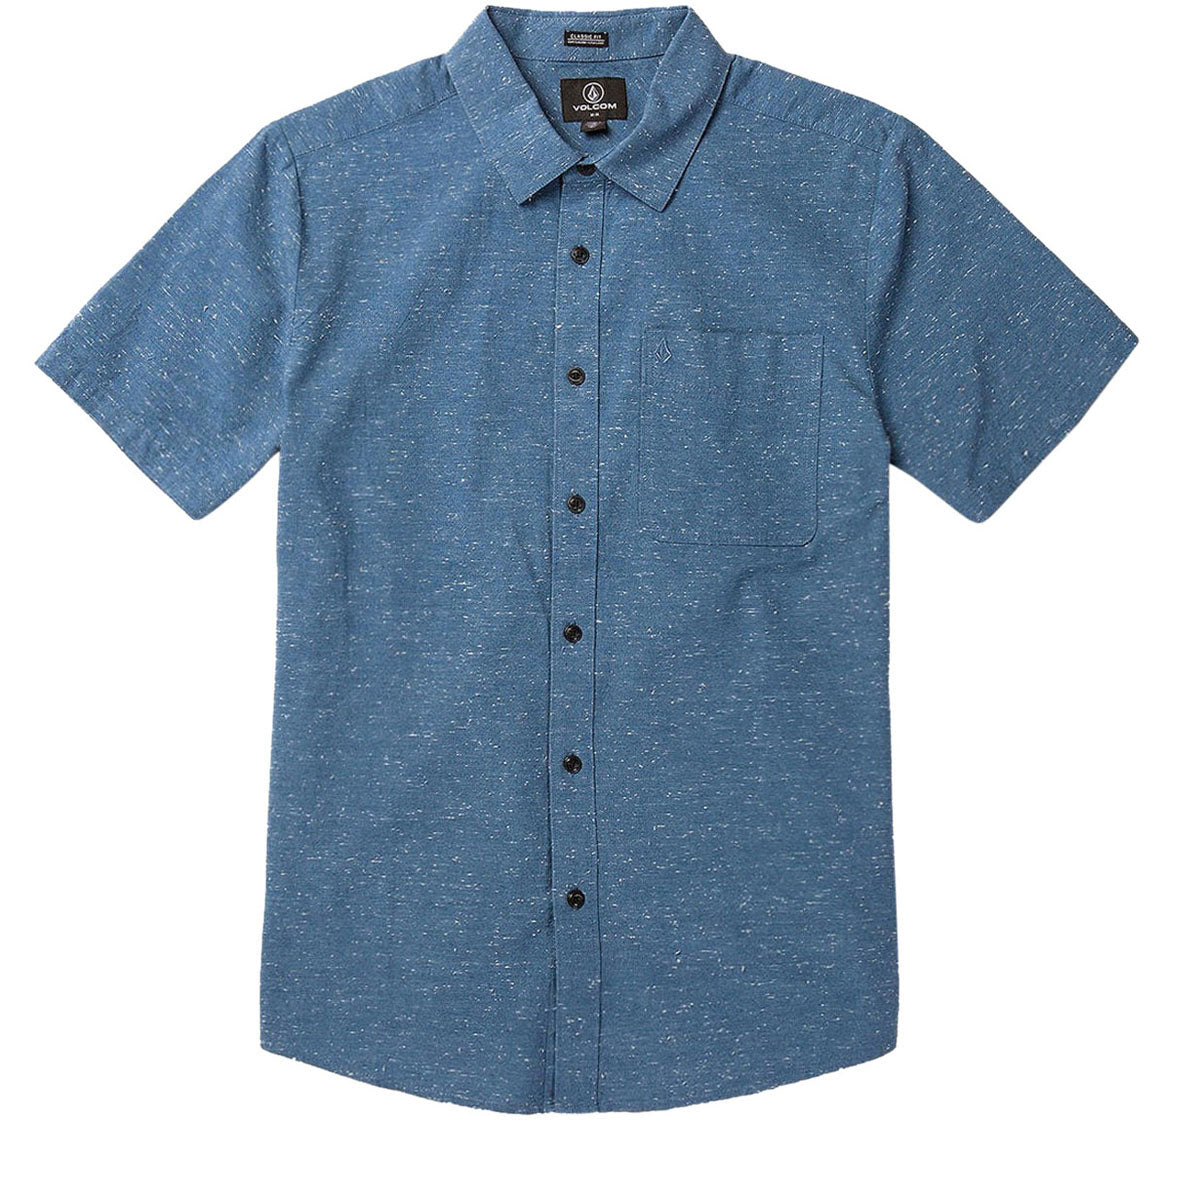 Volcom Date Knight Shirt - Stone Blue image 1